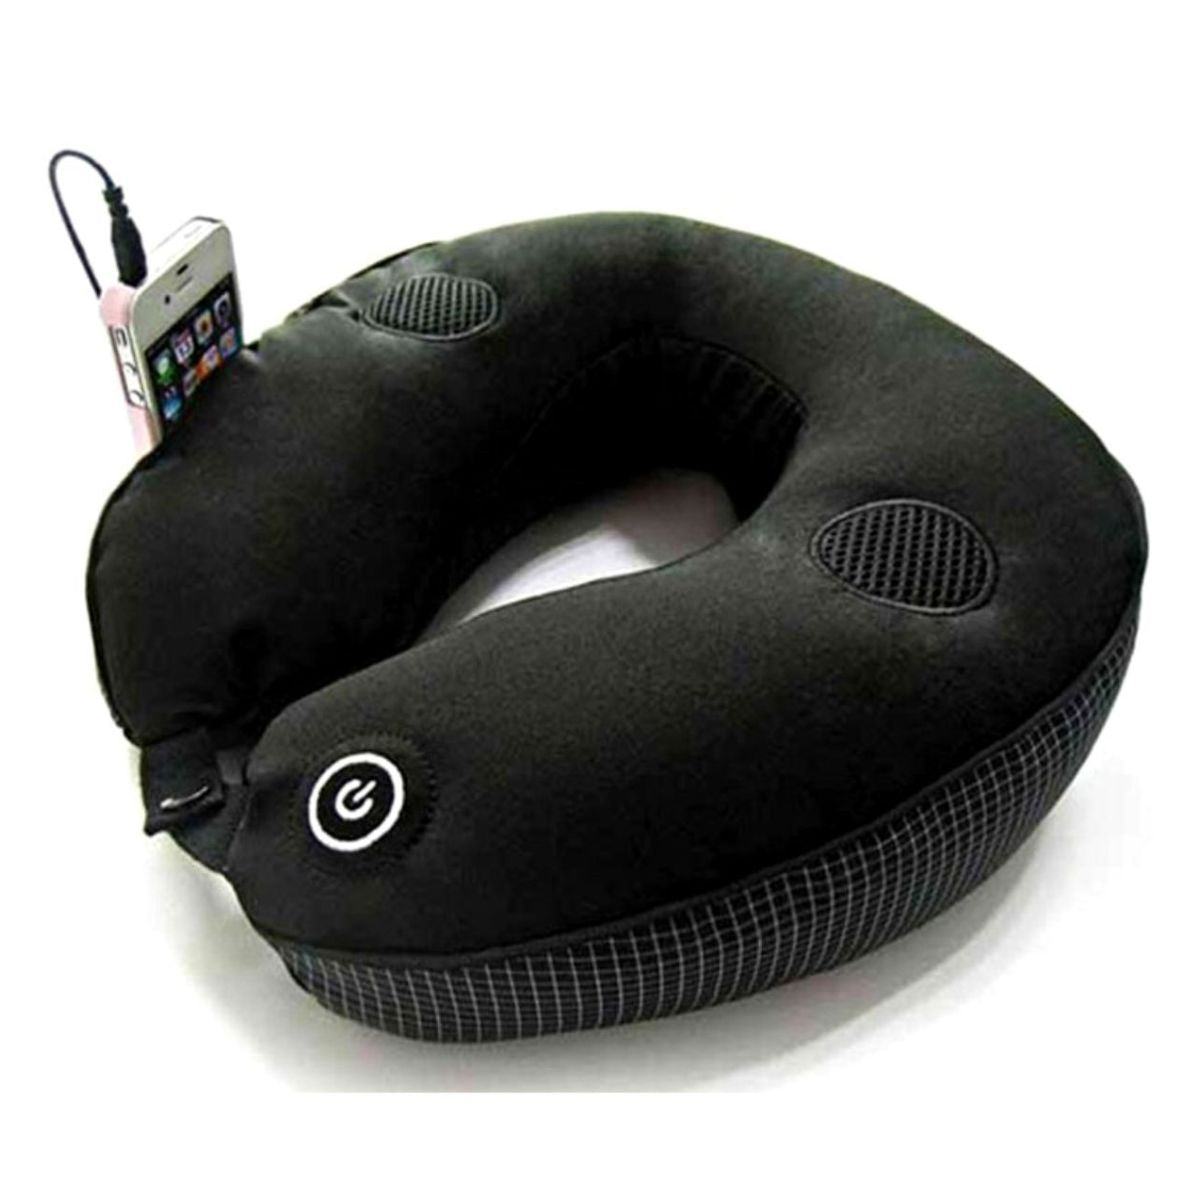 Neck Pillow Vibration MP3